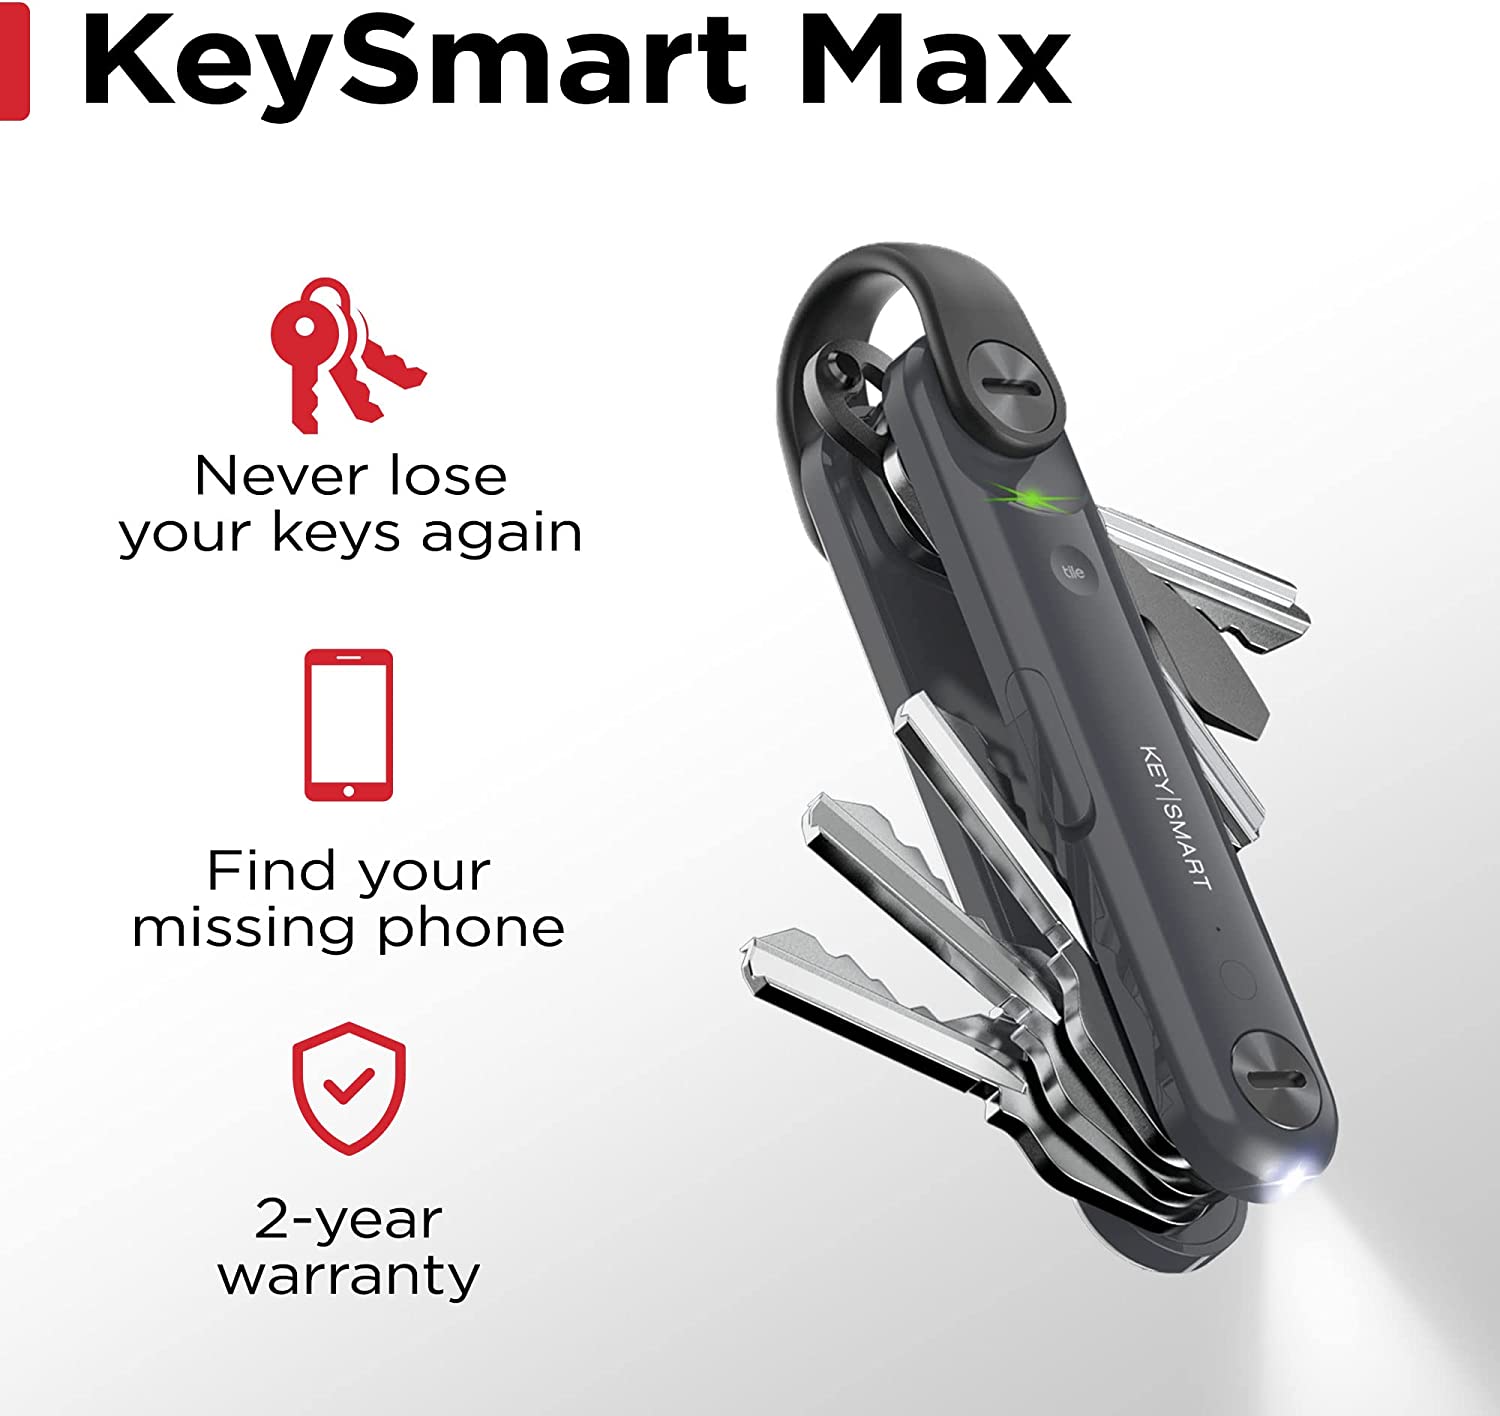 KeySmart iPro Smart Key Organizer